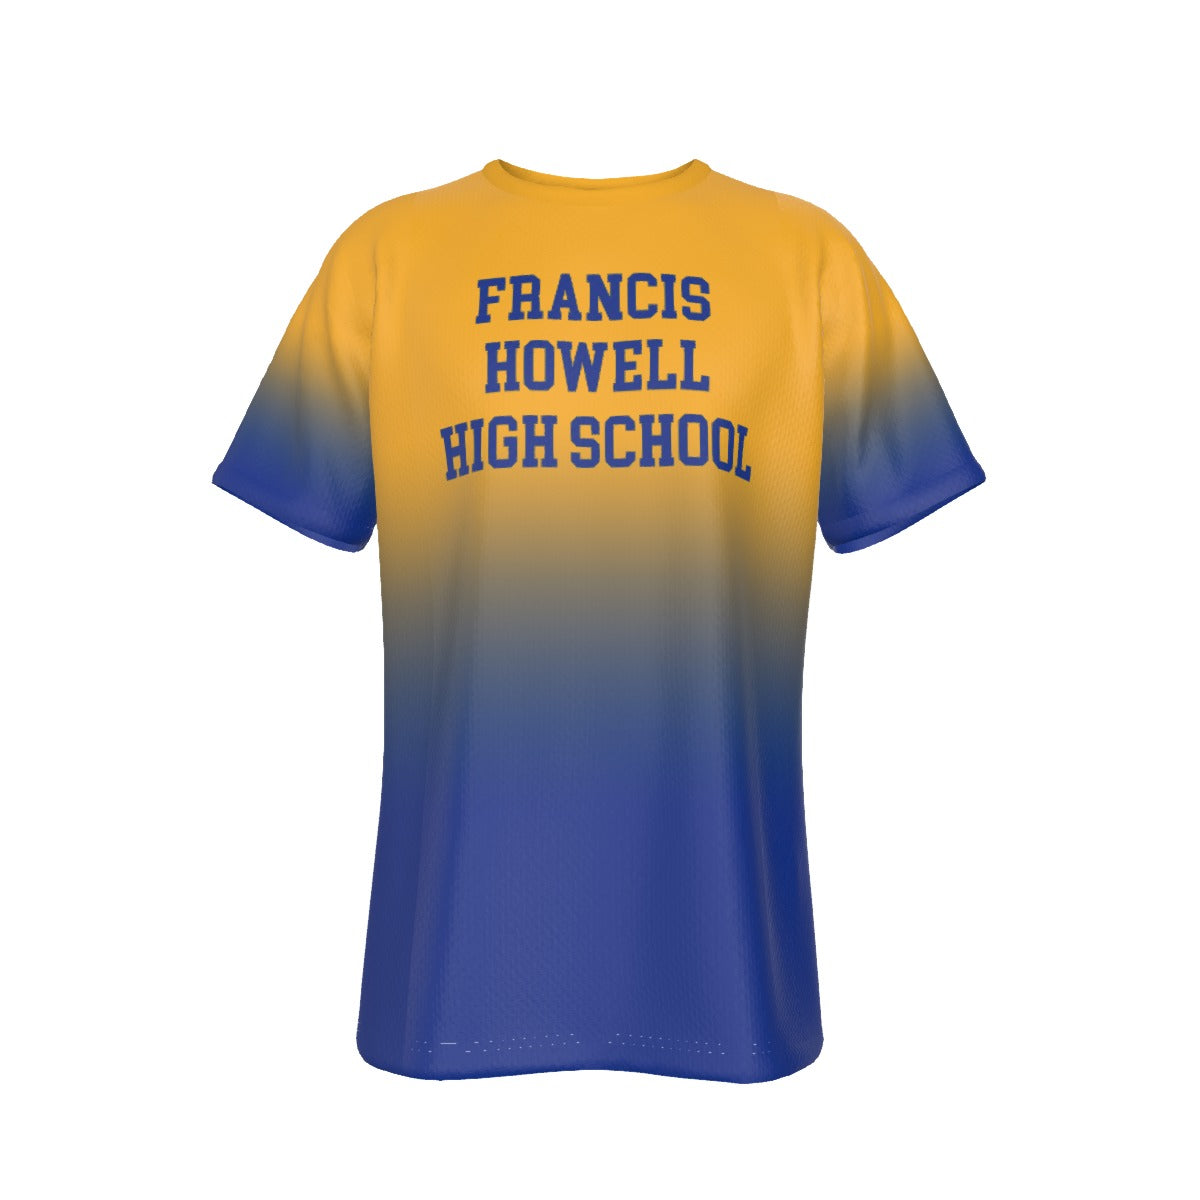 Francis Howell High School